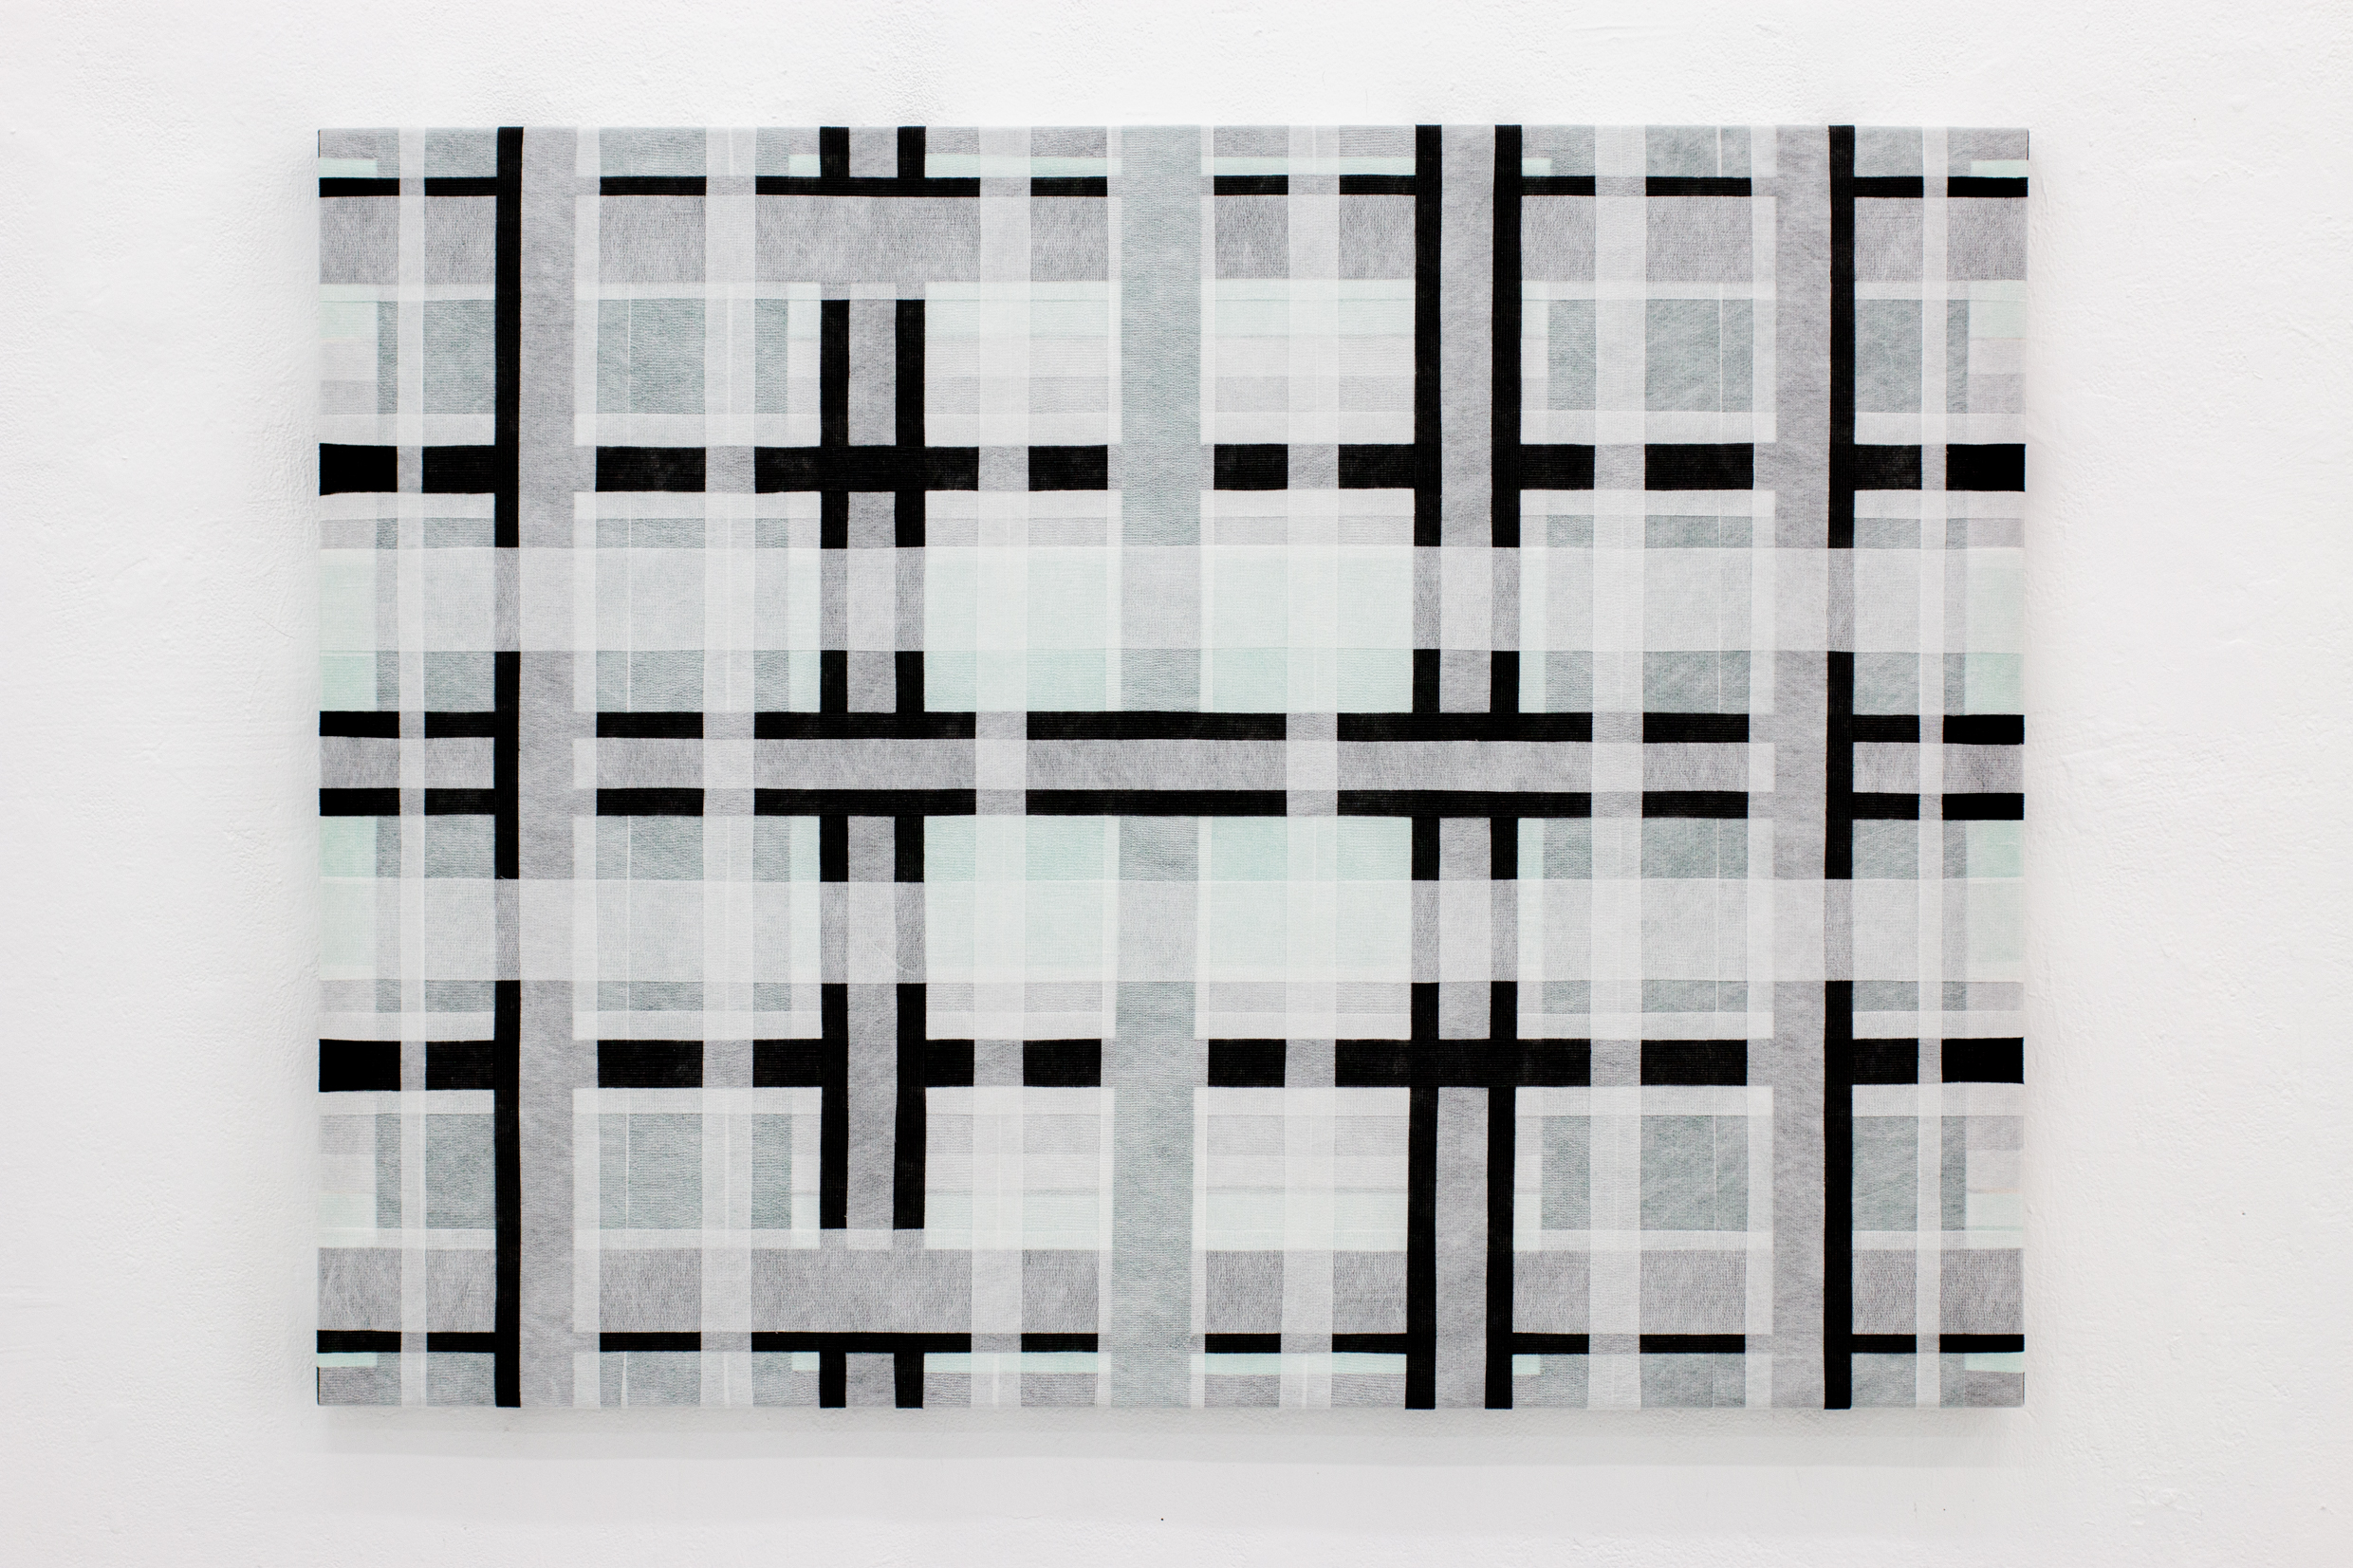 Uri Kloss
Fixin
2021
Straps, Bandages and Mixed Media
123x163x4.5 cm